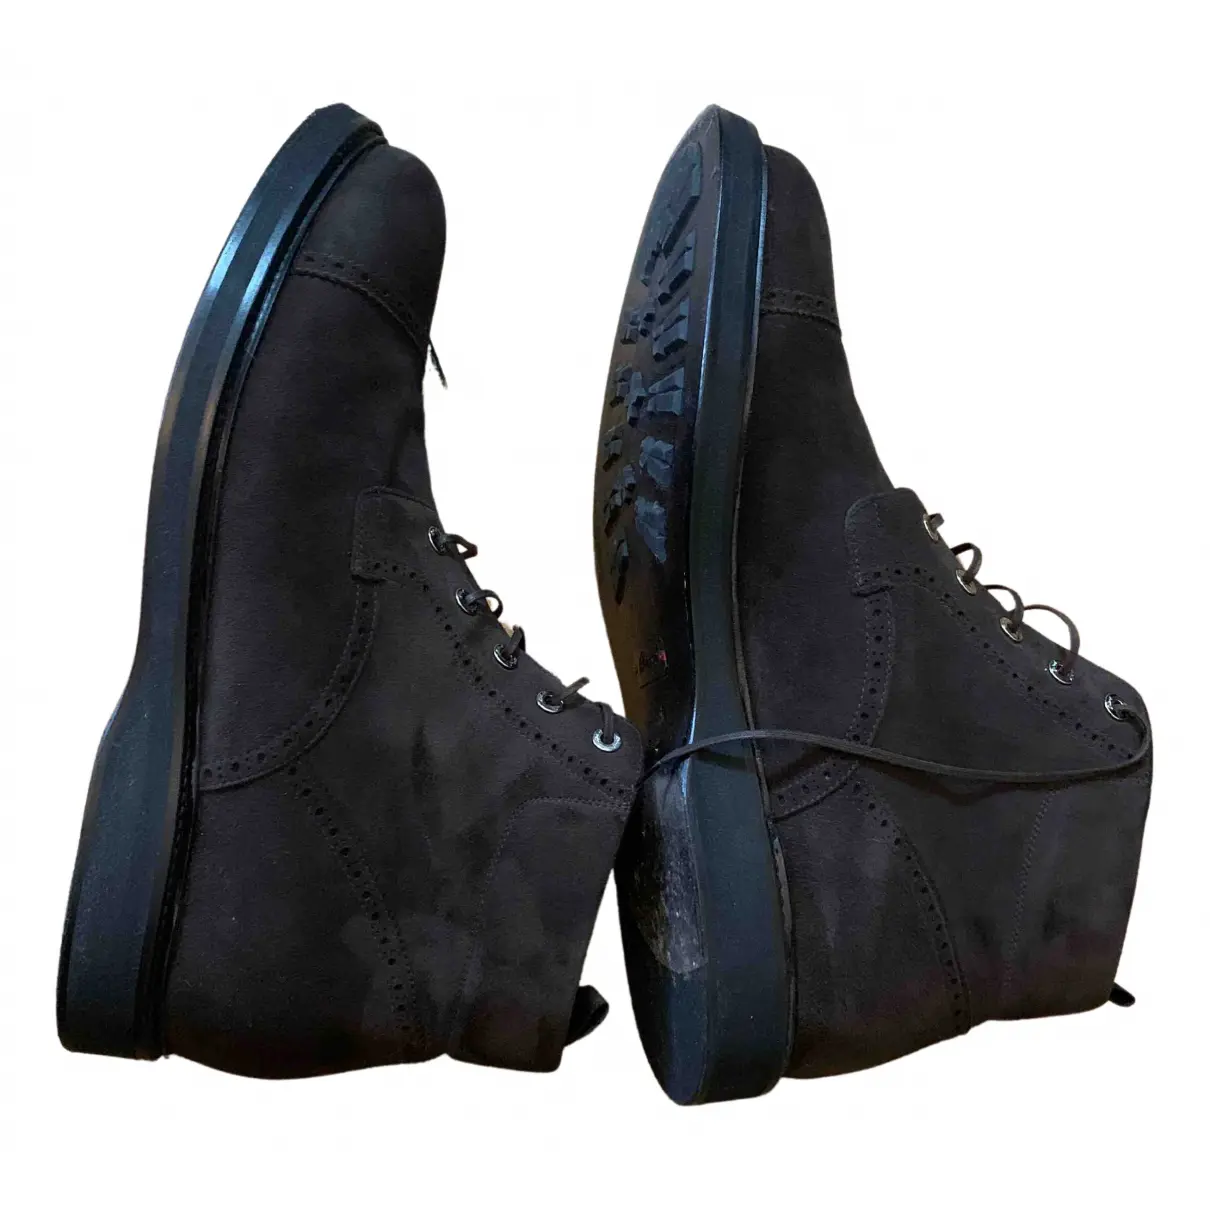 Buy Brioni Brown Suede Boots online